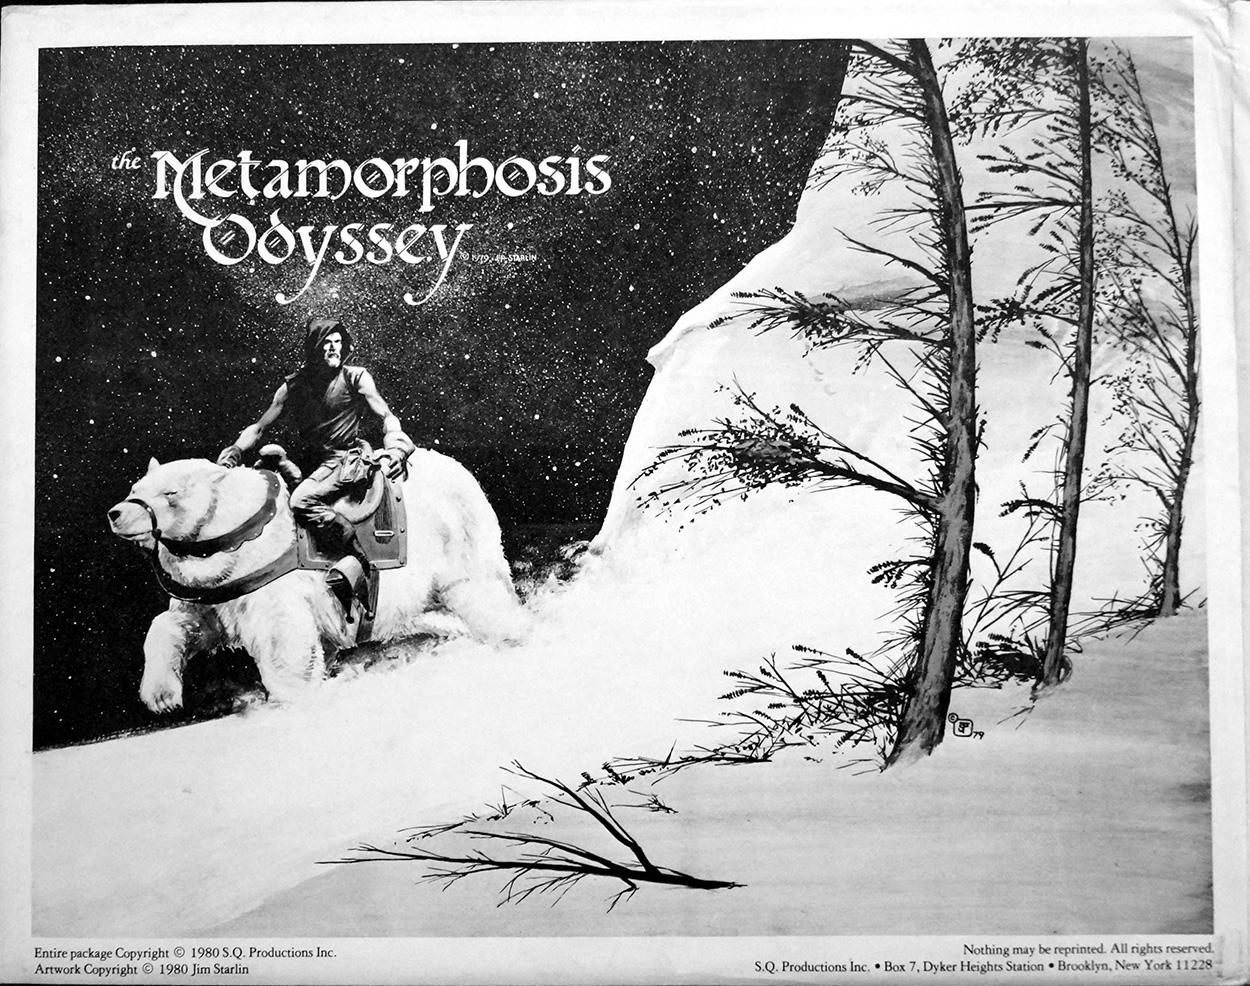 Metamorphosis Odyssey (Portfolio) (Prints) art by Jim Starlin at The Illustration Art Gallery